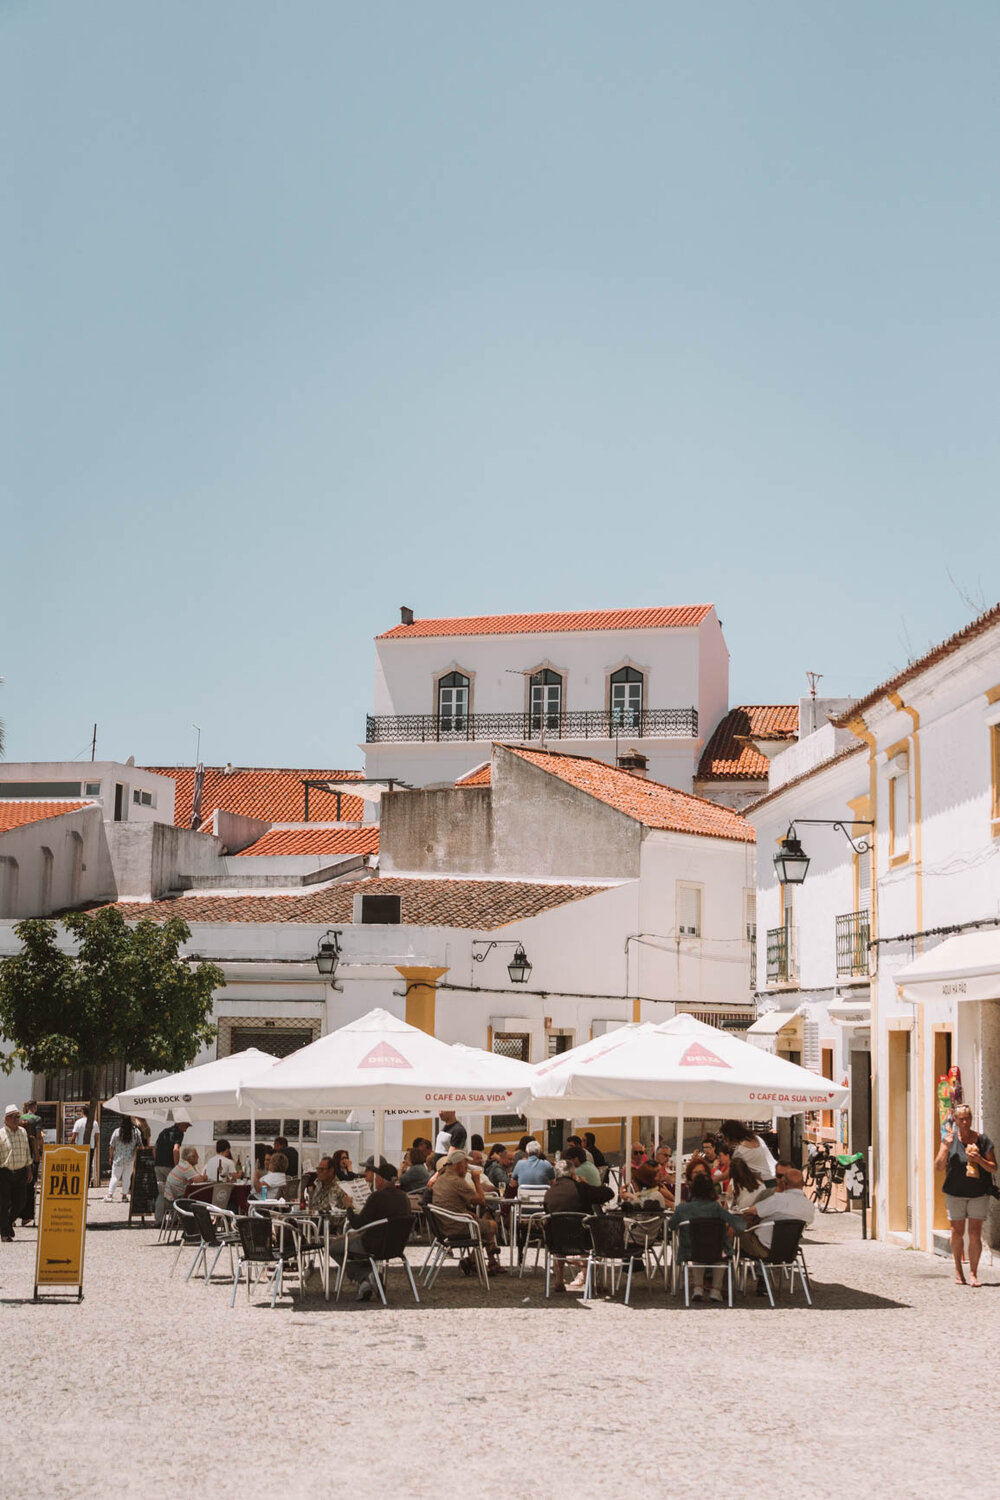 Portugal travel tips, travel to Portugal, Algarve Portugal, Alentejo Portugal